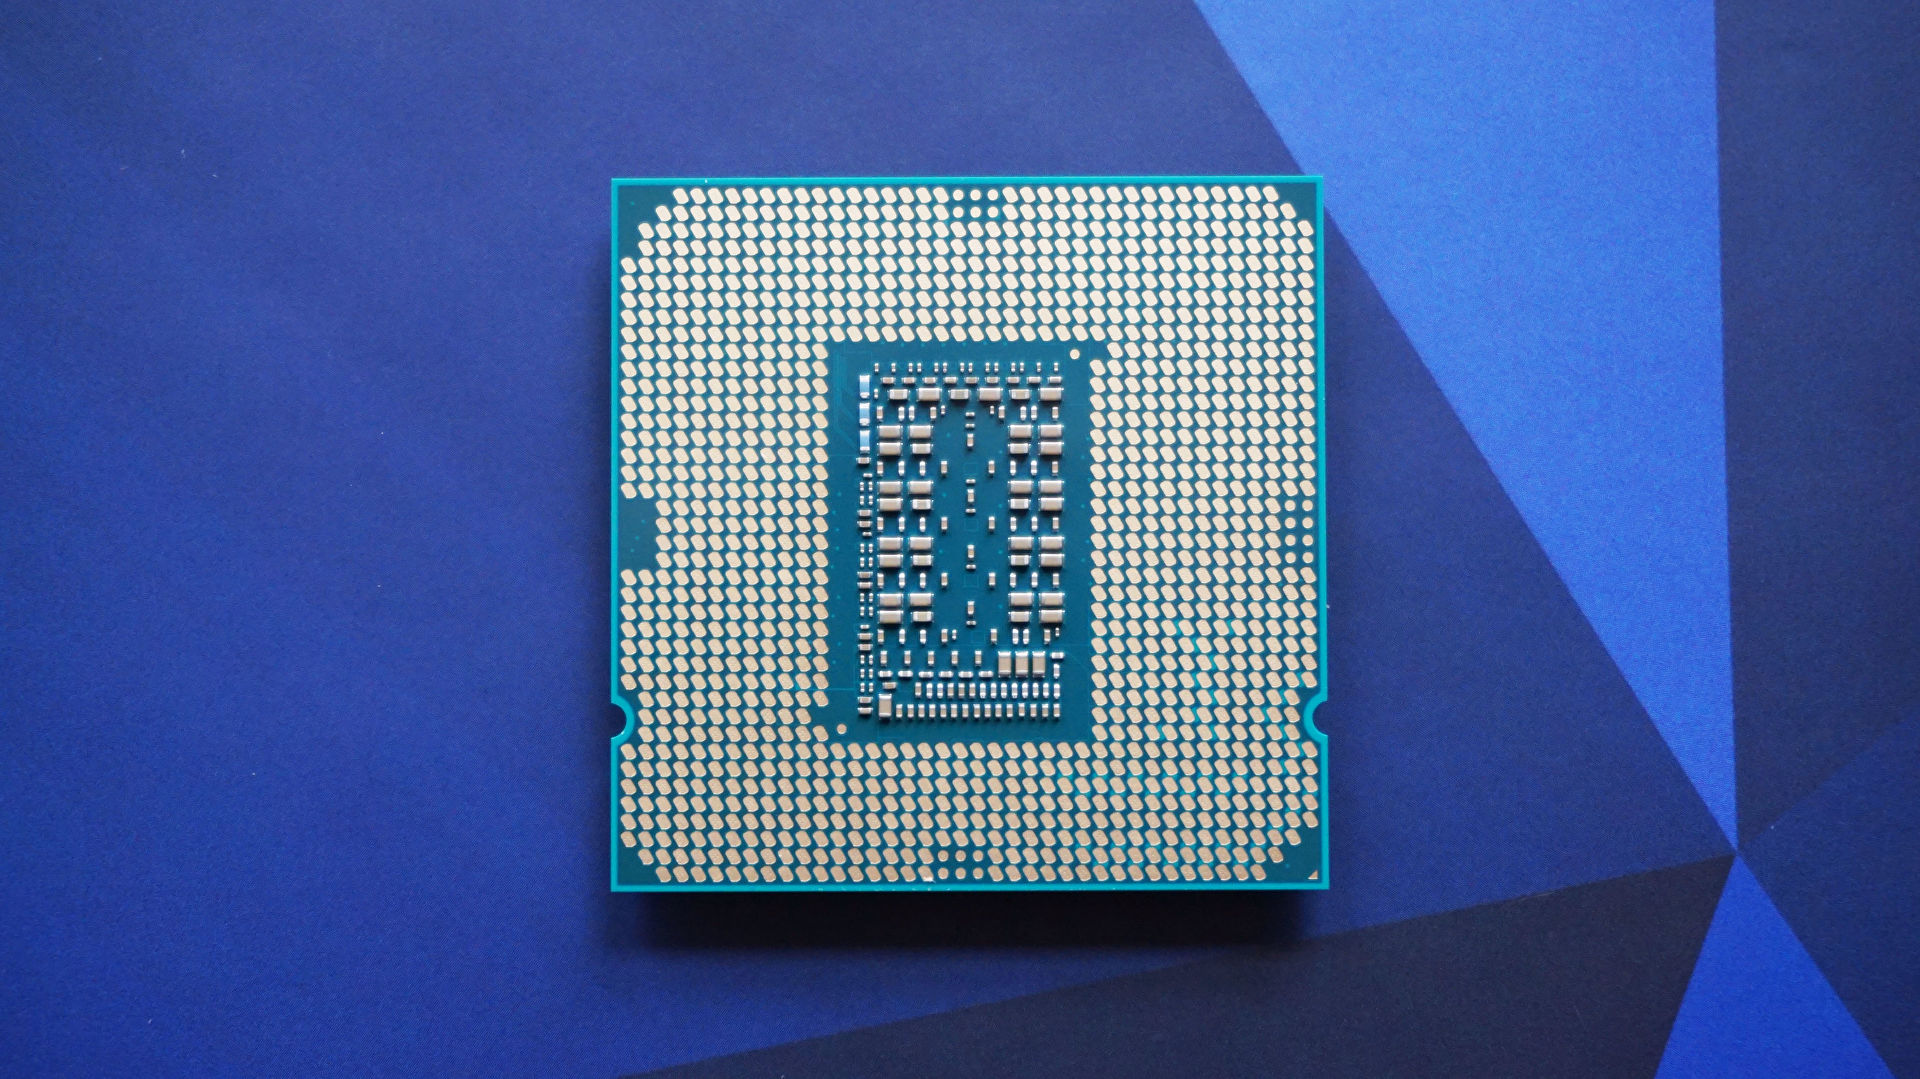 7. Intel i5-11600K Processor